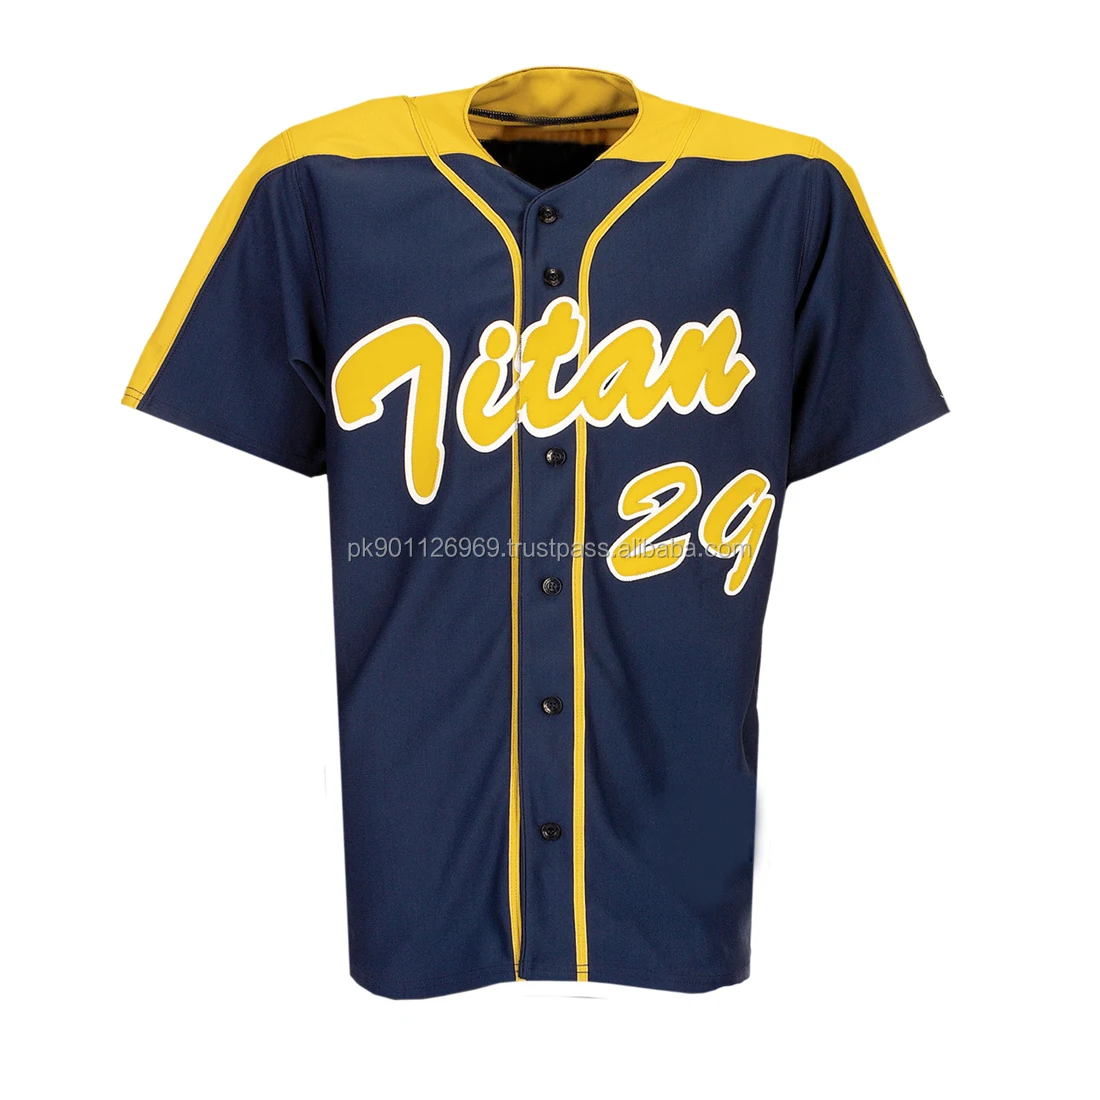 Custom Baseball Jerseys  Full Color Customizable Apparel 